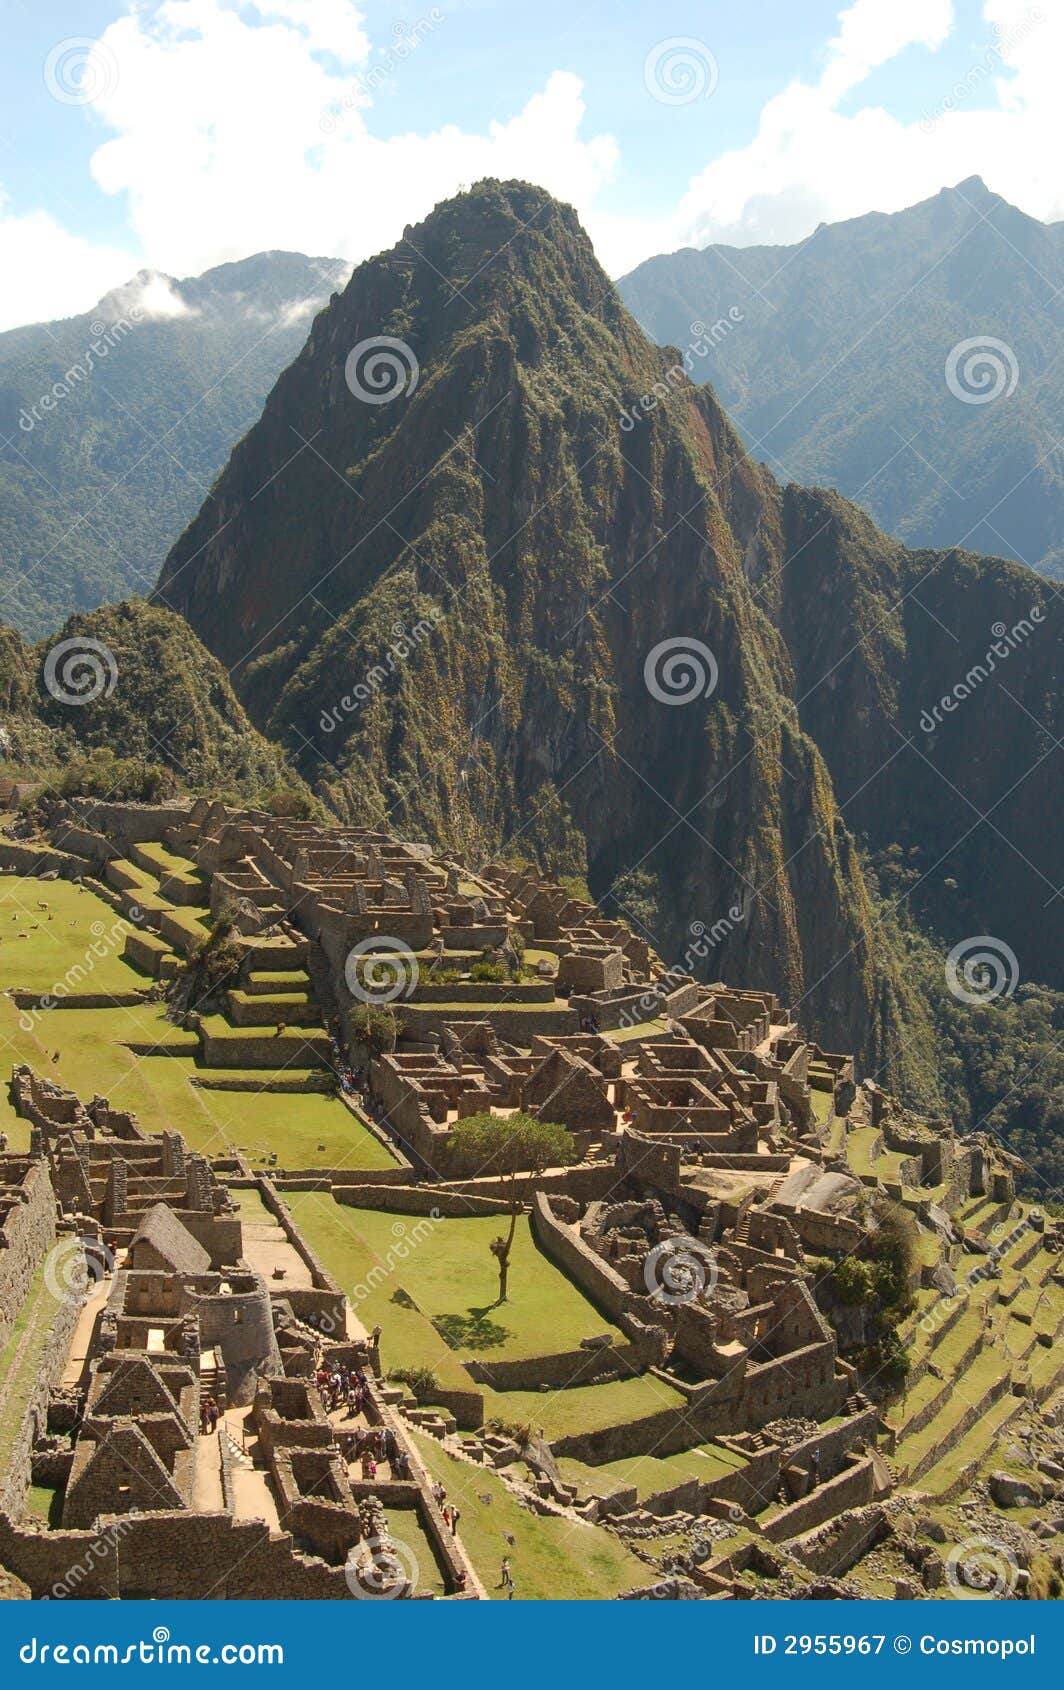 Machu Picchu ruins. View on ruins of Machu Picchu